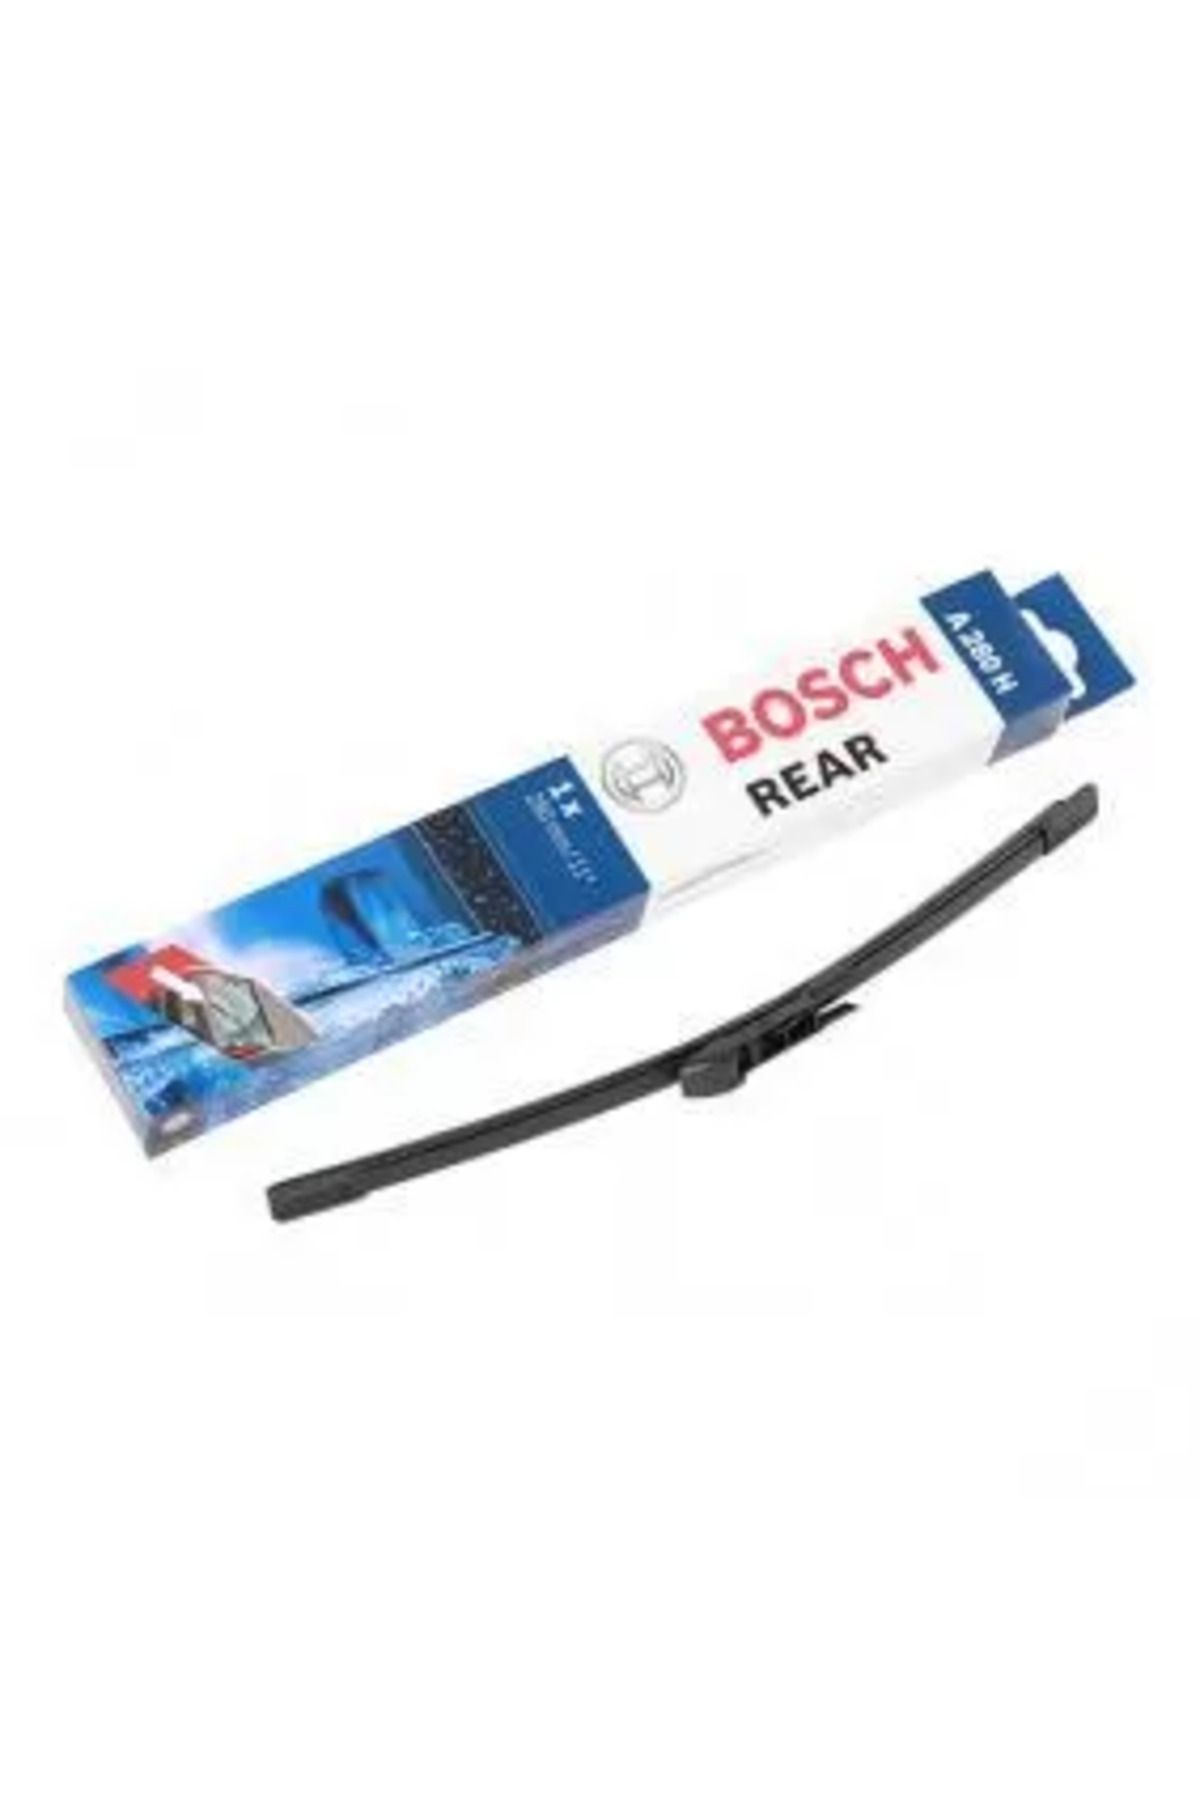 Bosch Sılecek Supurgesı Arka Cam Aerotwın [280 Mm] Bmw E81 E87 Mını R55 R56 R59 Mercedes X156 13 S213 16